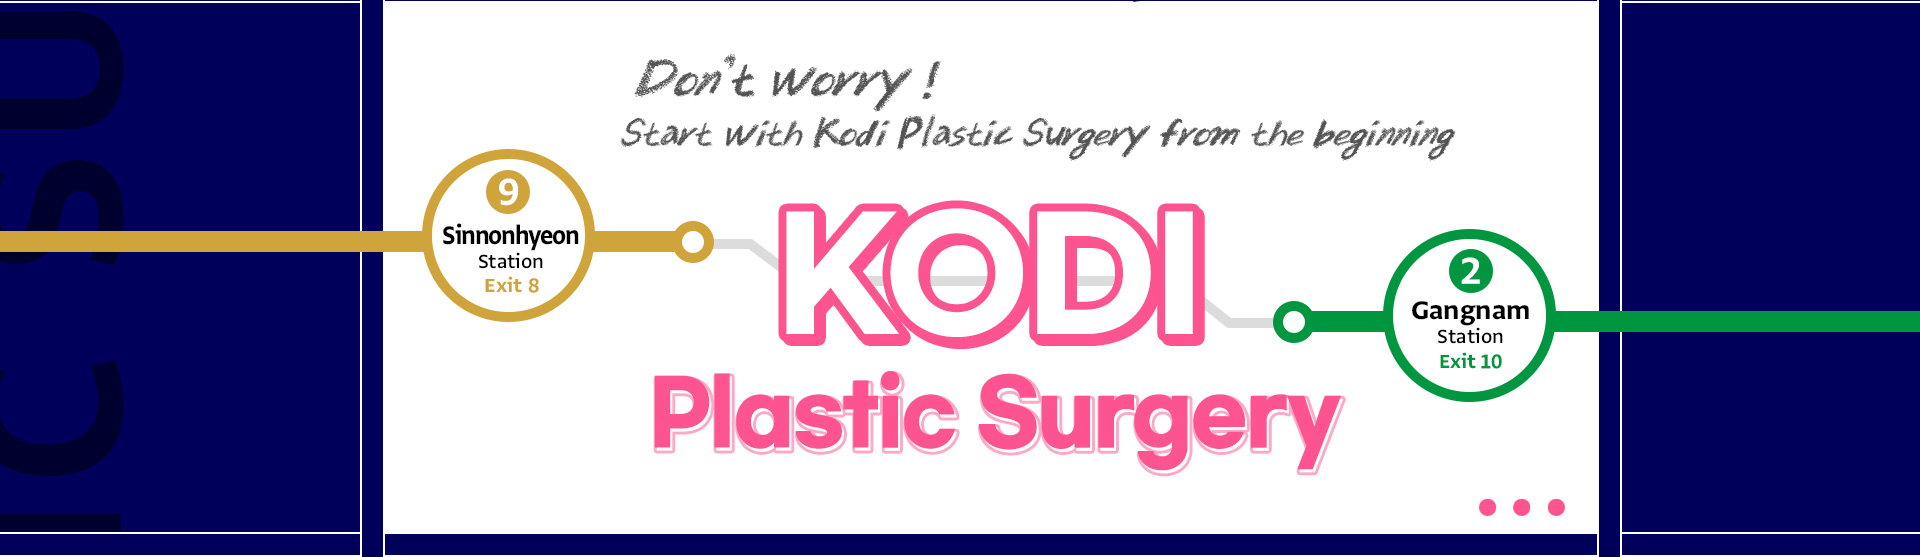 Don't worry Start with Kodi Plastic Surgery from the beginning Kodi Plastic Surgery